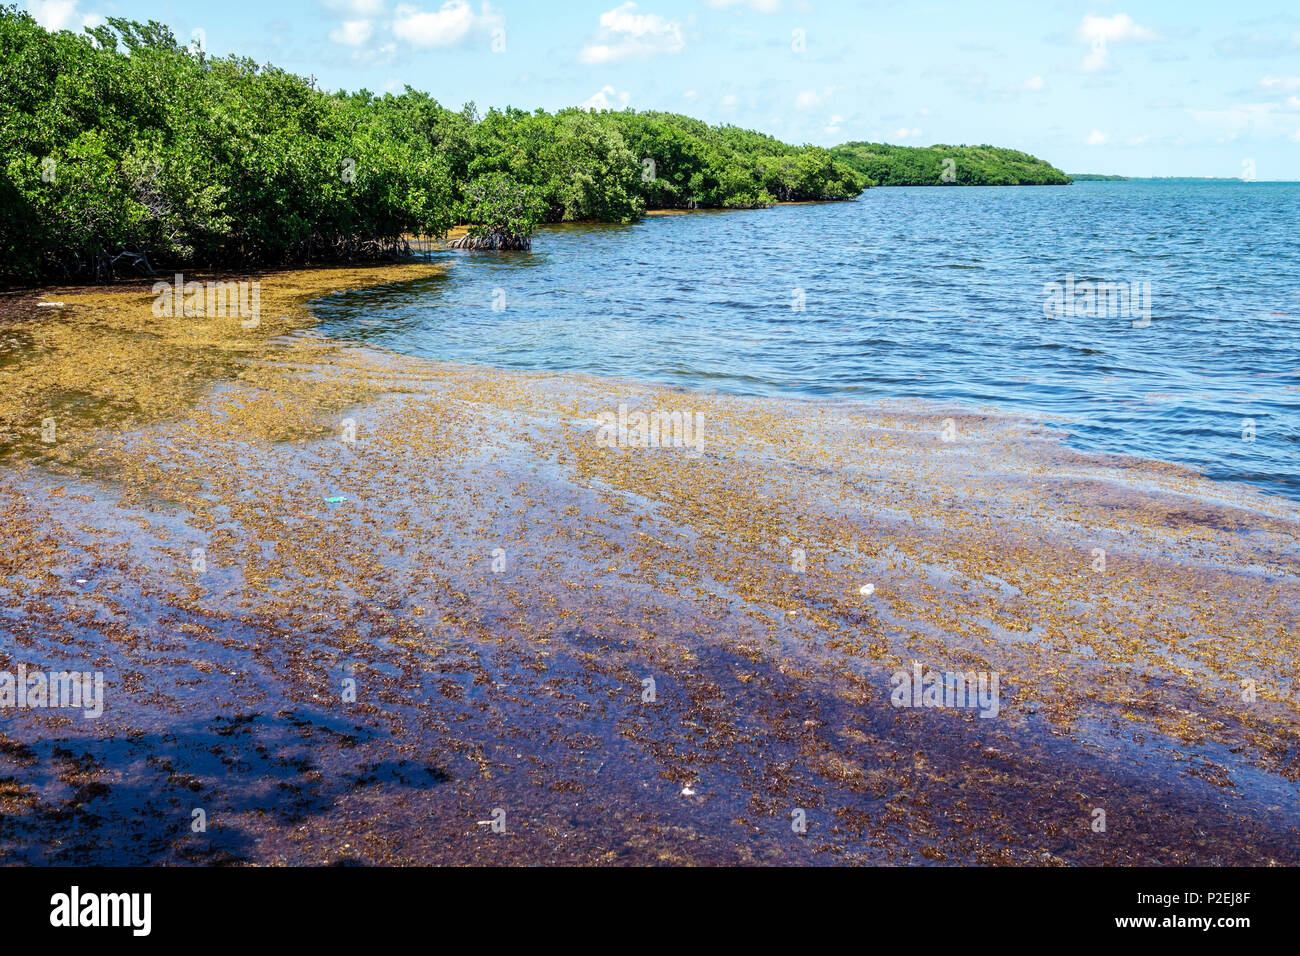 Florida Upper Key Largo Florida Keys,Harry Harris Beach & Park,Atlantic Ocean,seaweed marine debris collected,FL170818022 Stock Photo